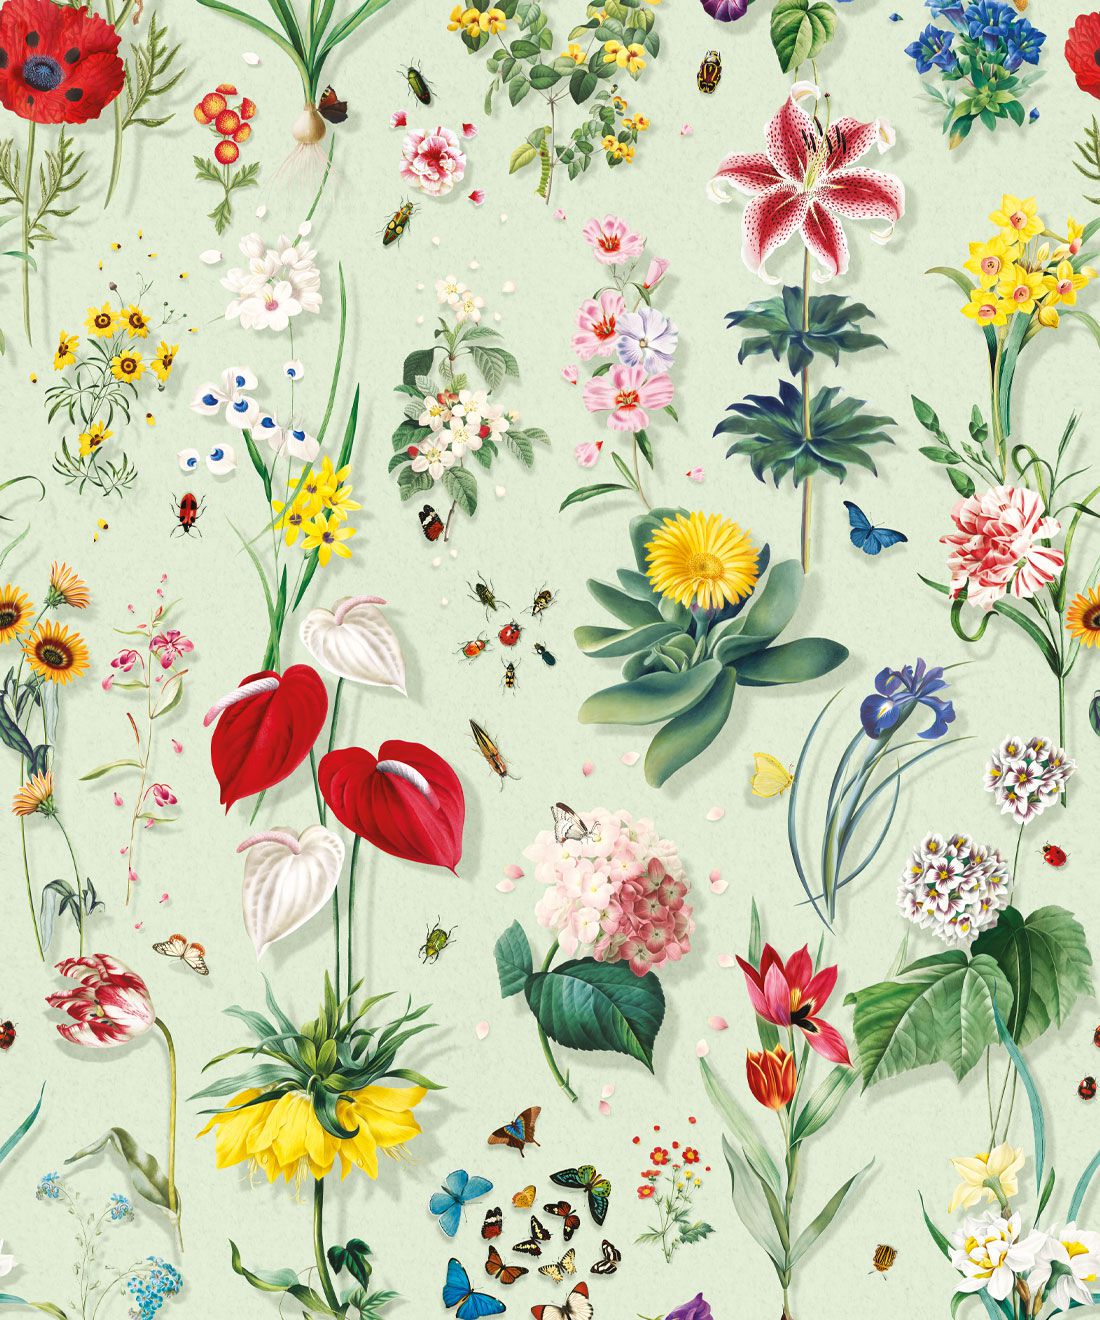 Jolie Wallpaper • Colourful Spring Floral Wallpaper Europe